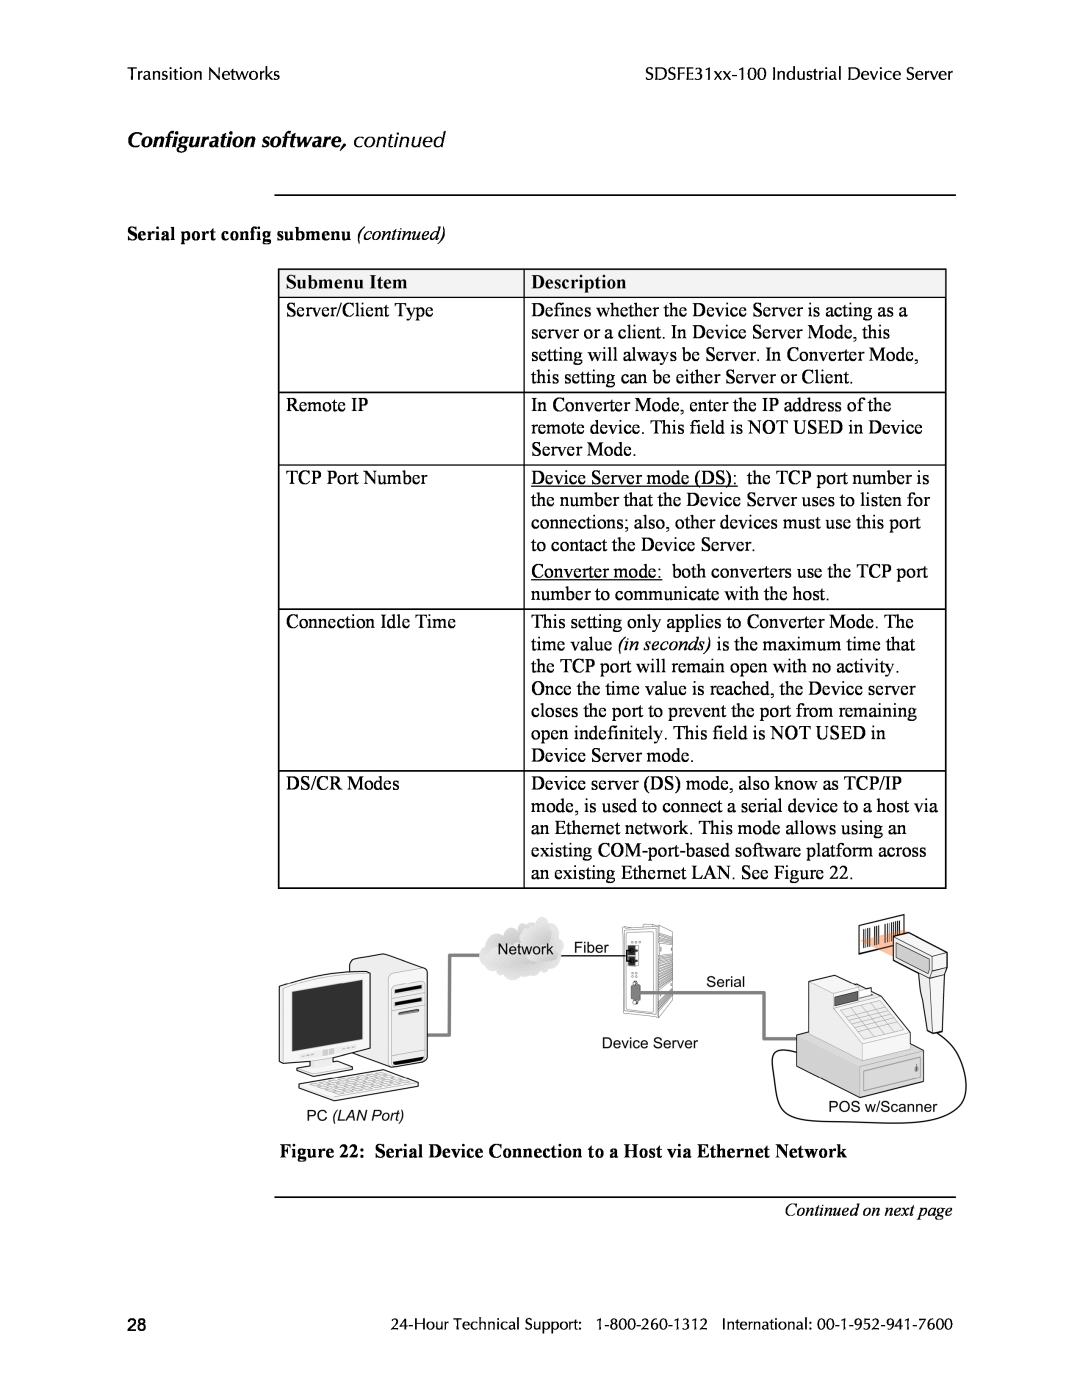 Transition Networks RS-232-TO-100BASE-FX, SDSFE31XX-100 Serial port config submenu continued, Submenu Item, Description 